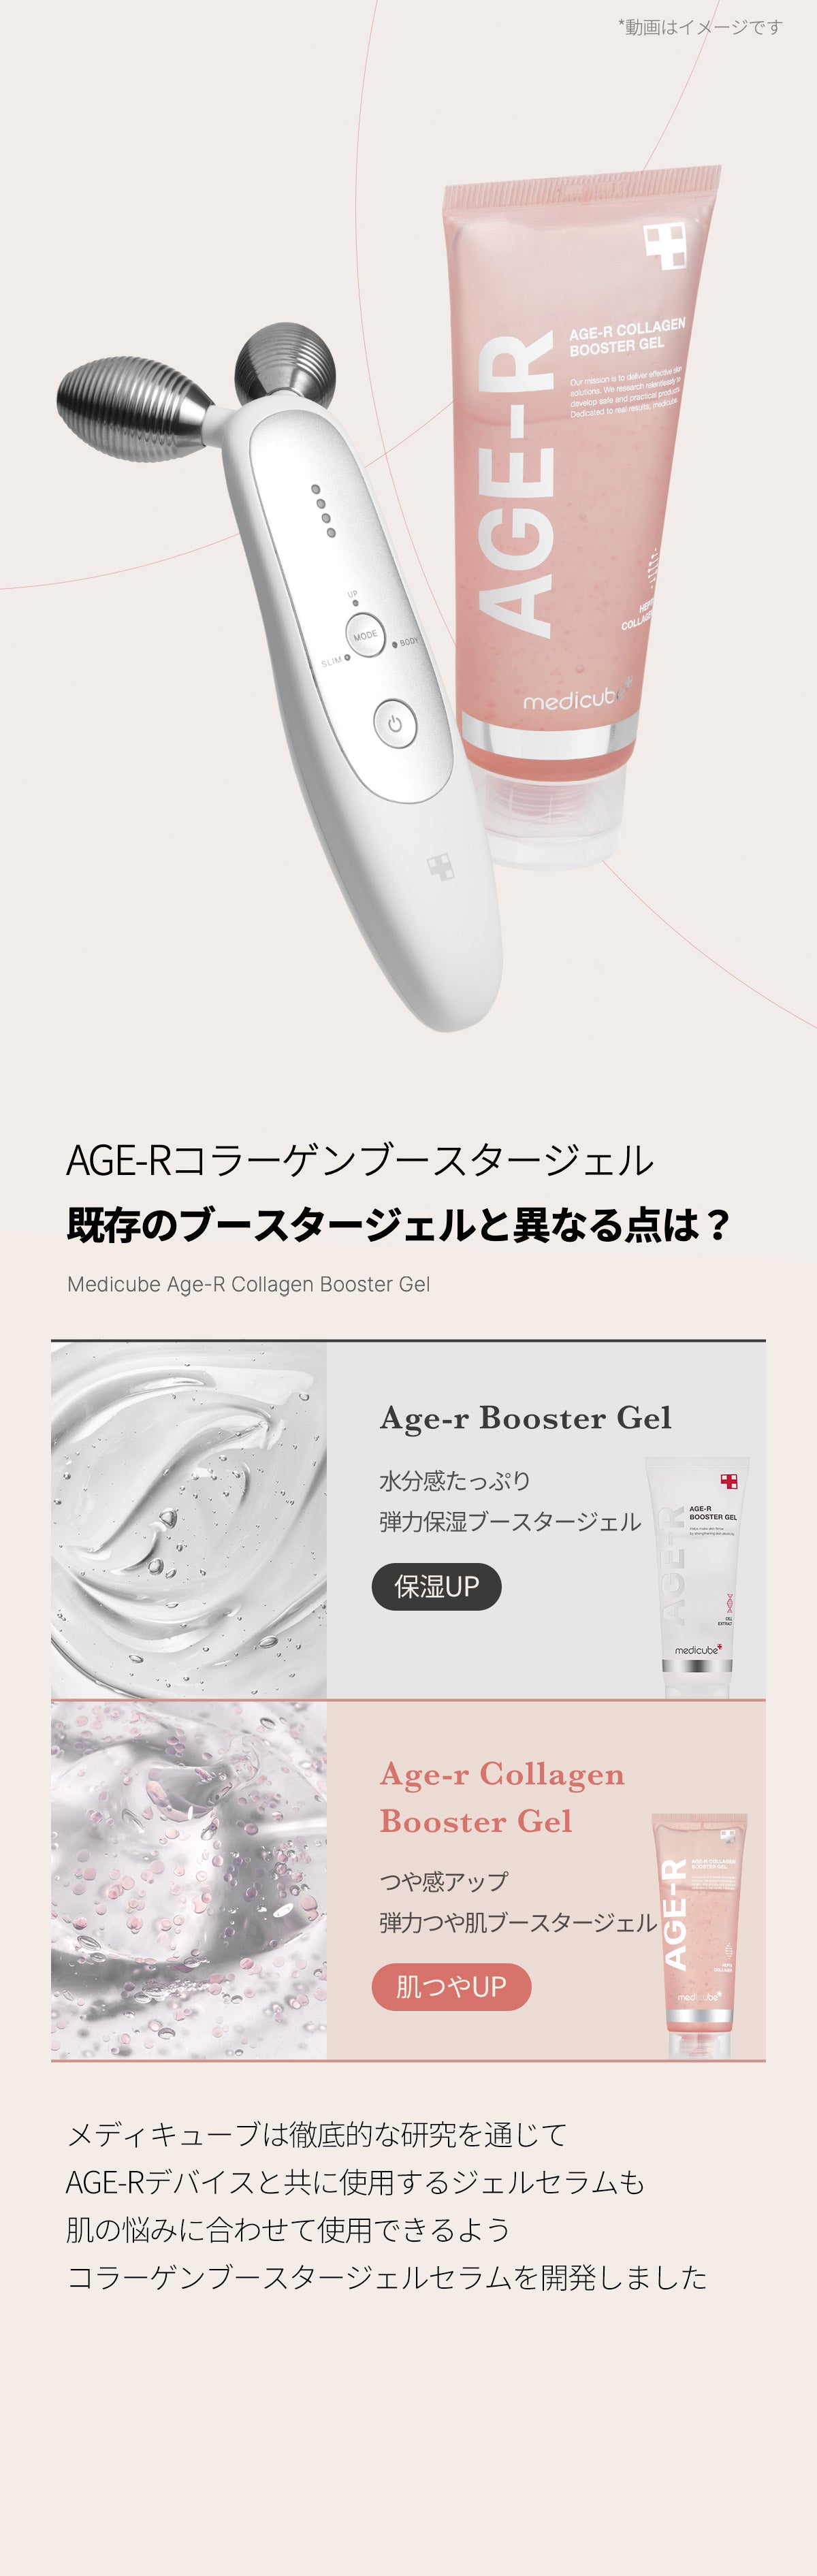 AGE-Rユーセラディープショット+コラーゲンブースタージェル【即購入可】